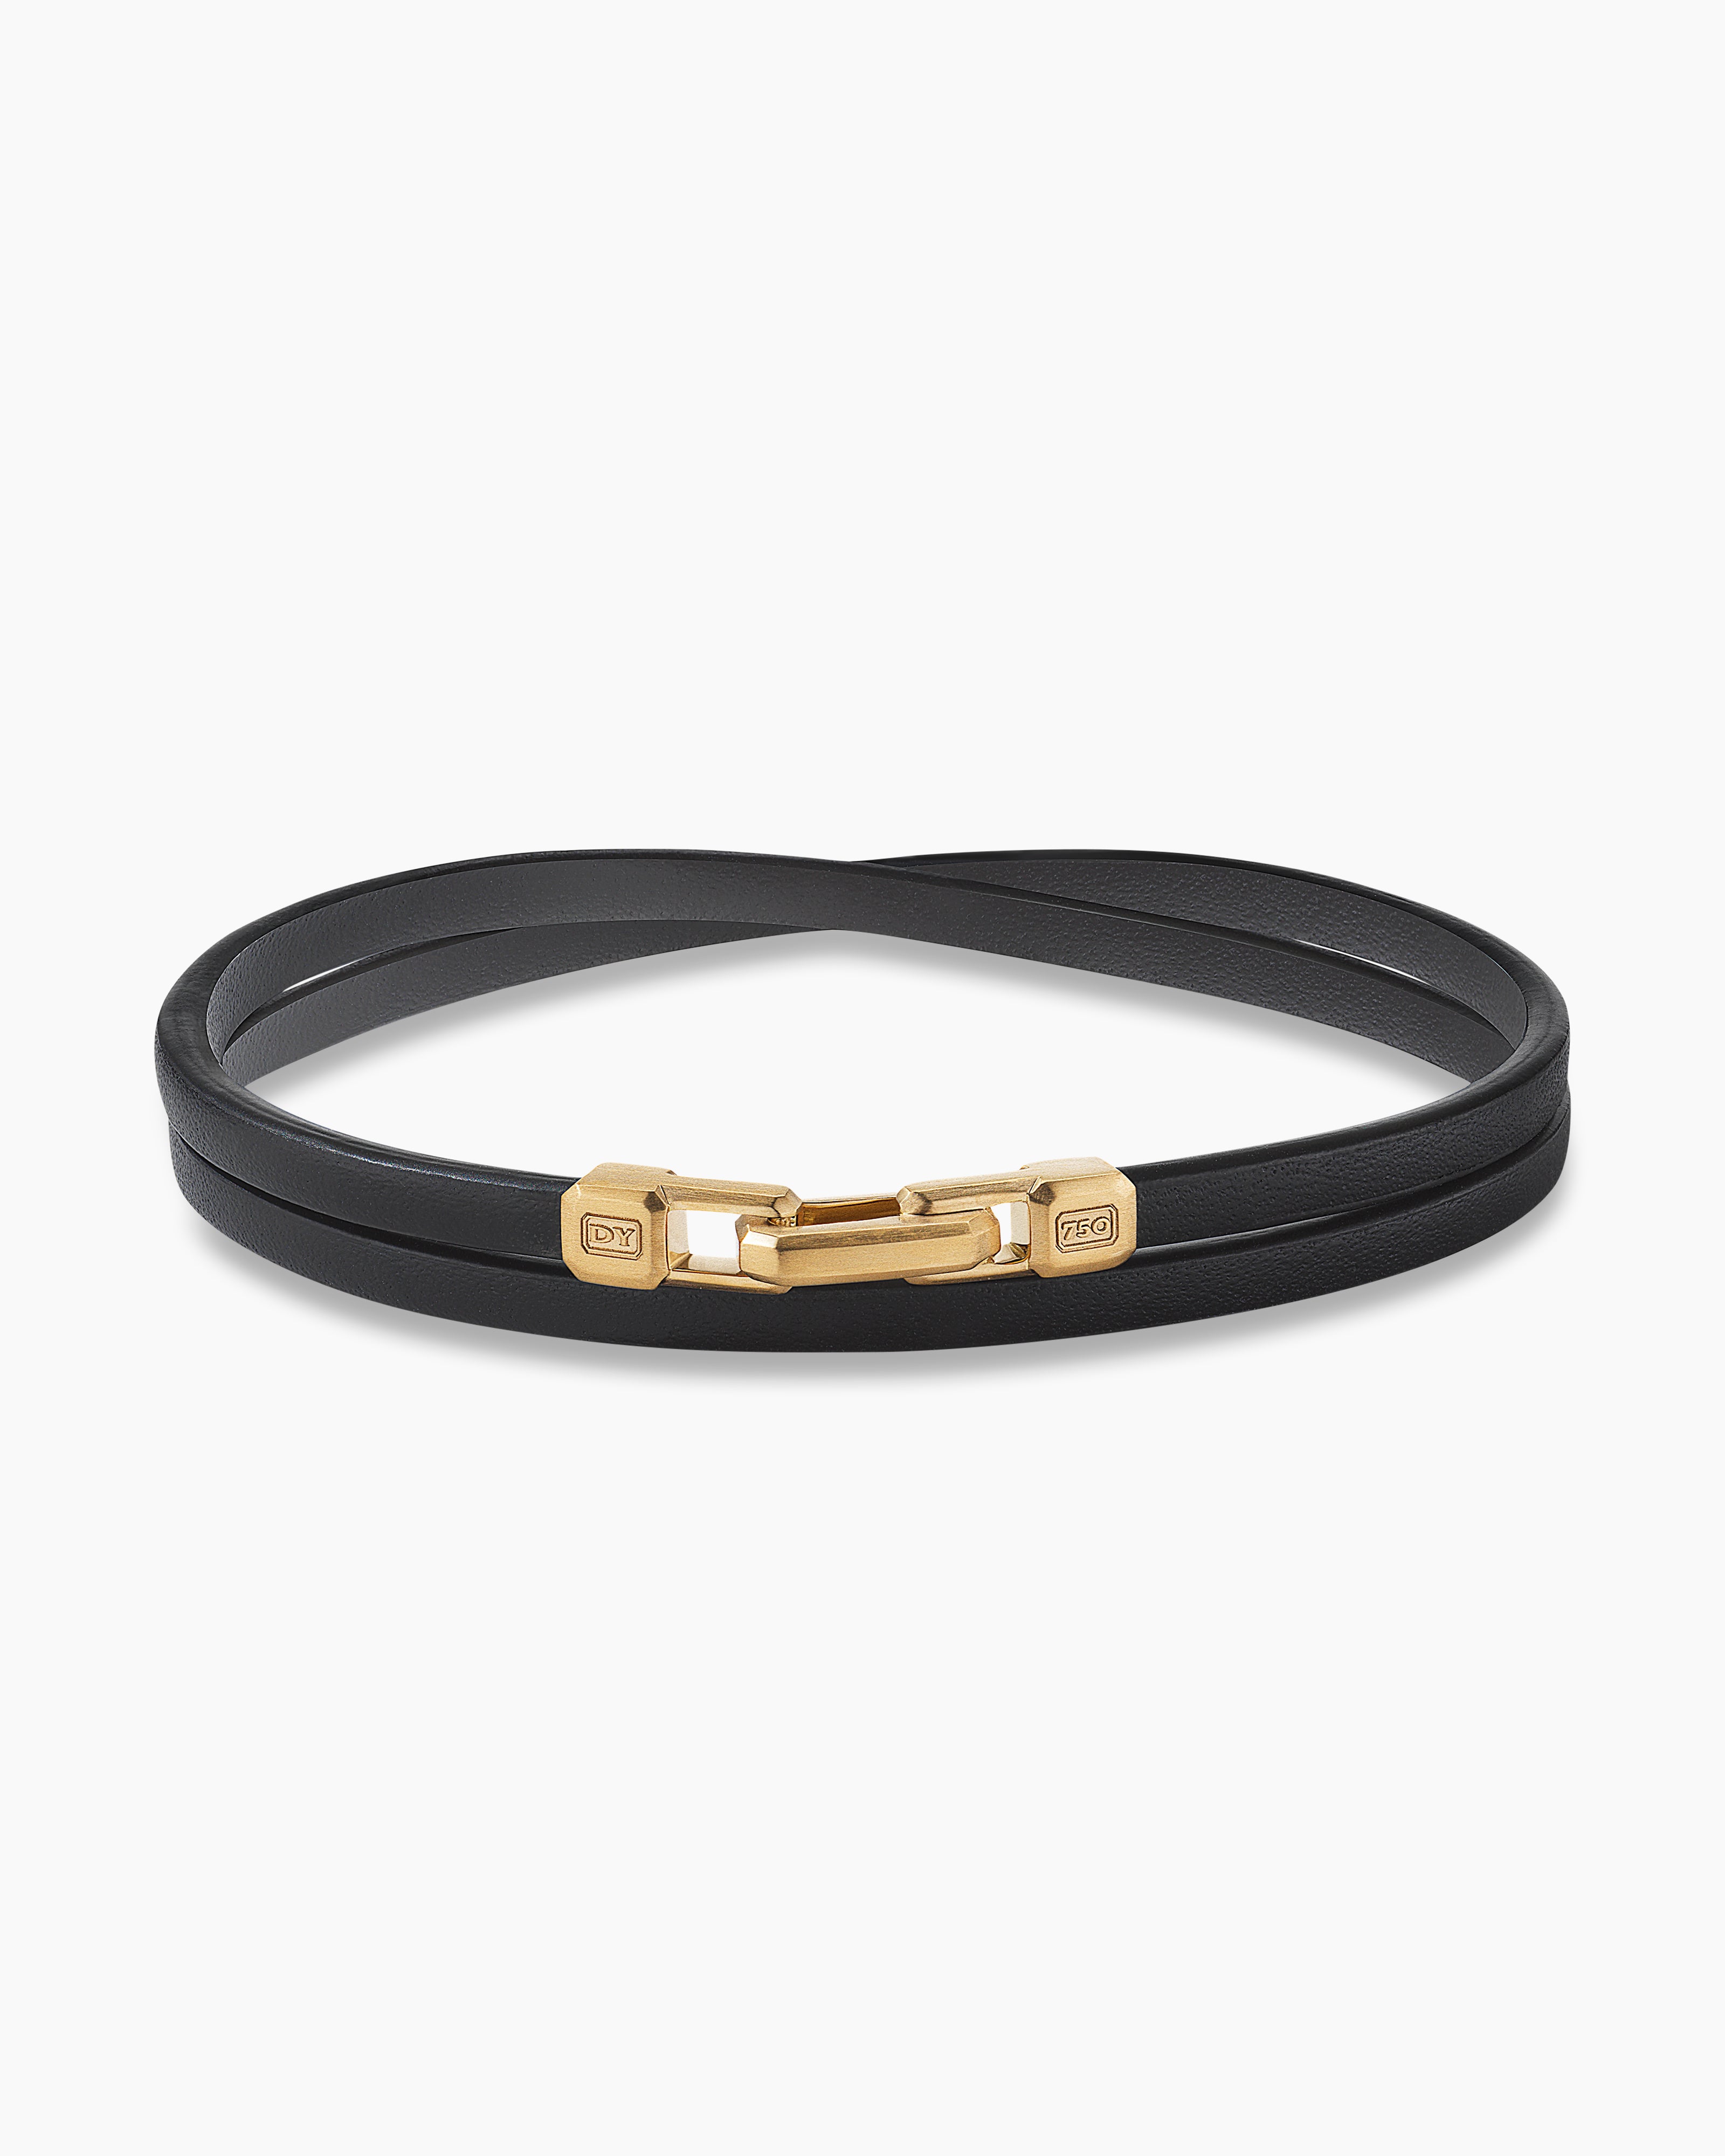 David Yurman Streamline Double Wrap Bracelet in Black Leather with 18K Yellow Gold